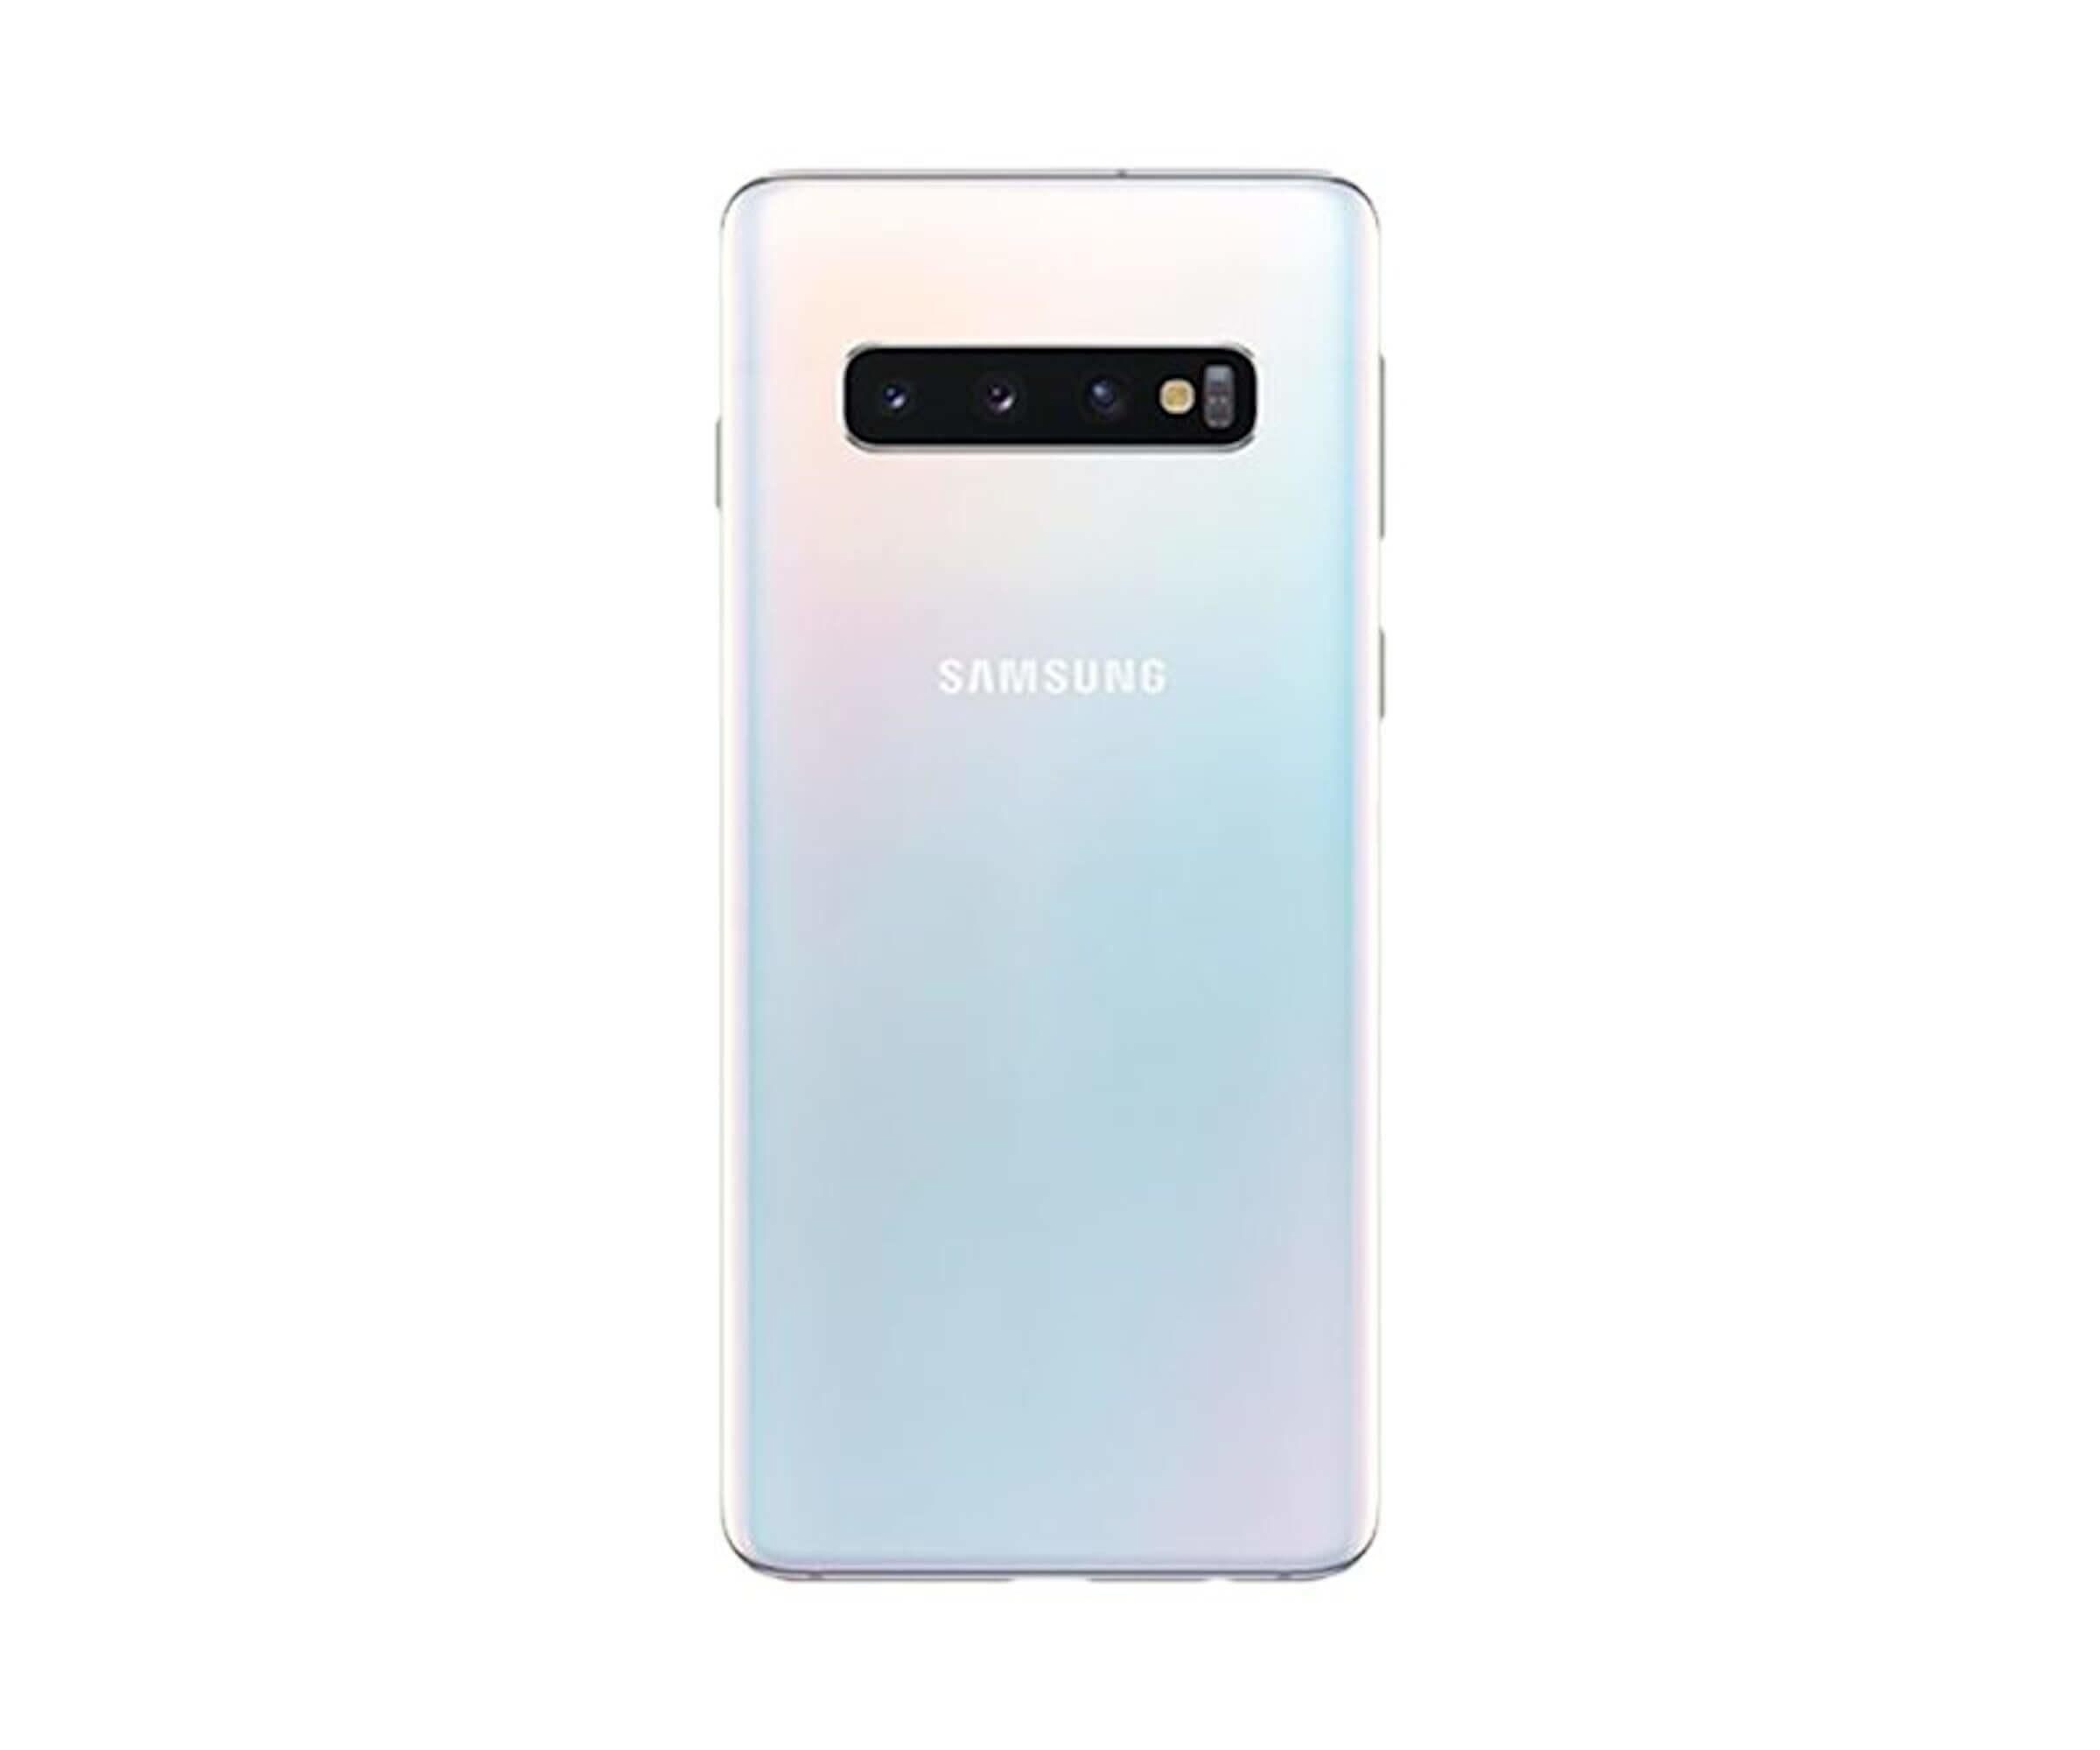 Samsung Galaxy S10 - Smartphone - Dual-SIM - 4G Gigabit Class LTE - 128 GB - microSDXC slot - TD-SCDMA / UMTS / GSM - 6.1